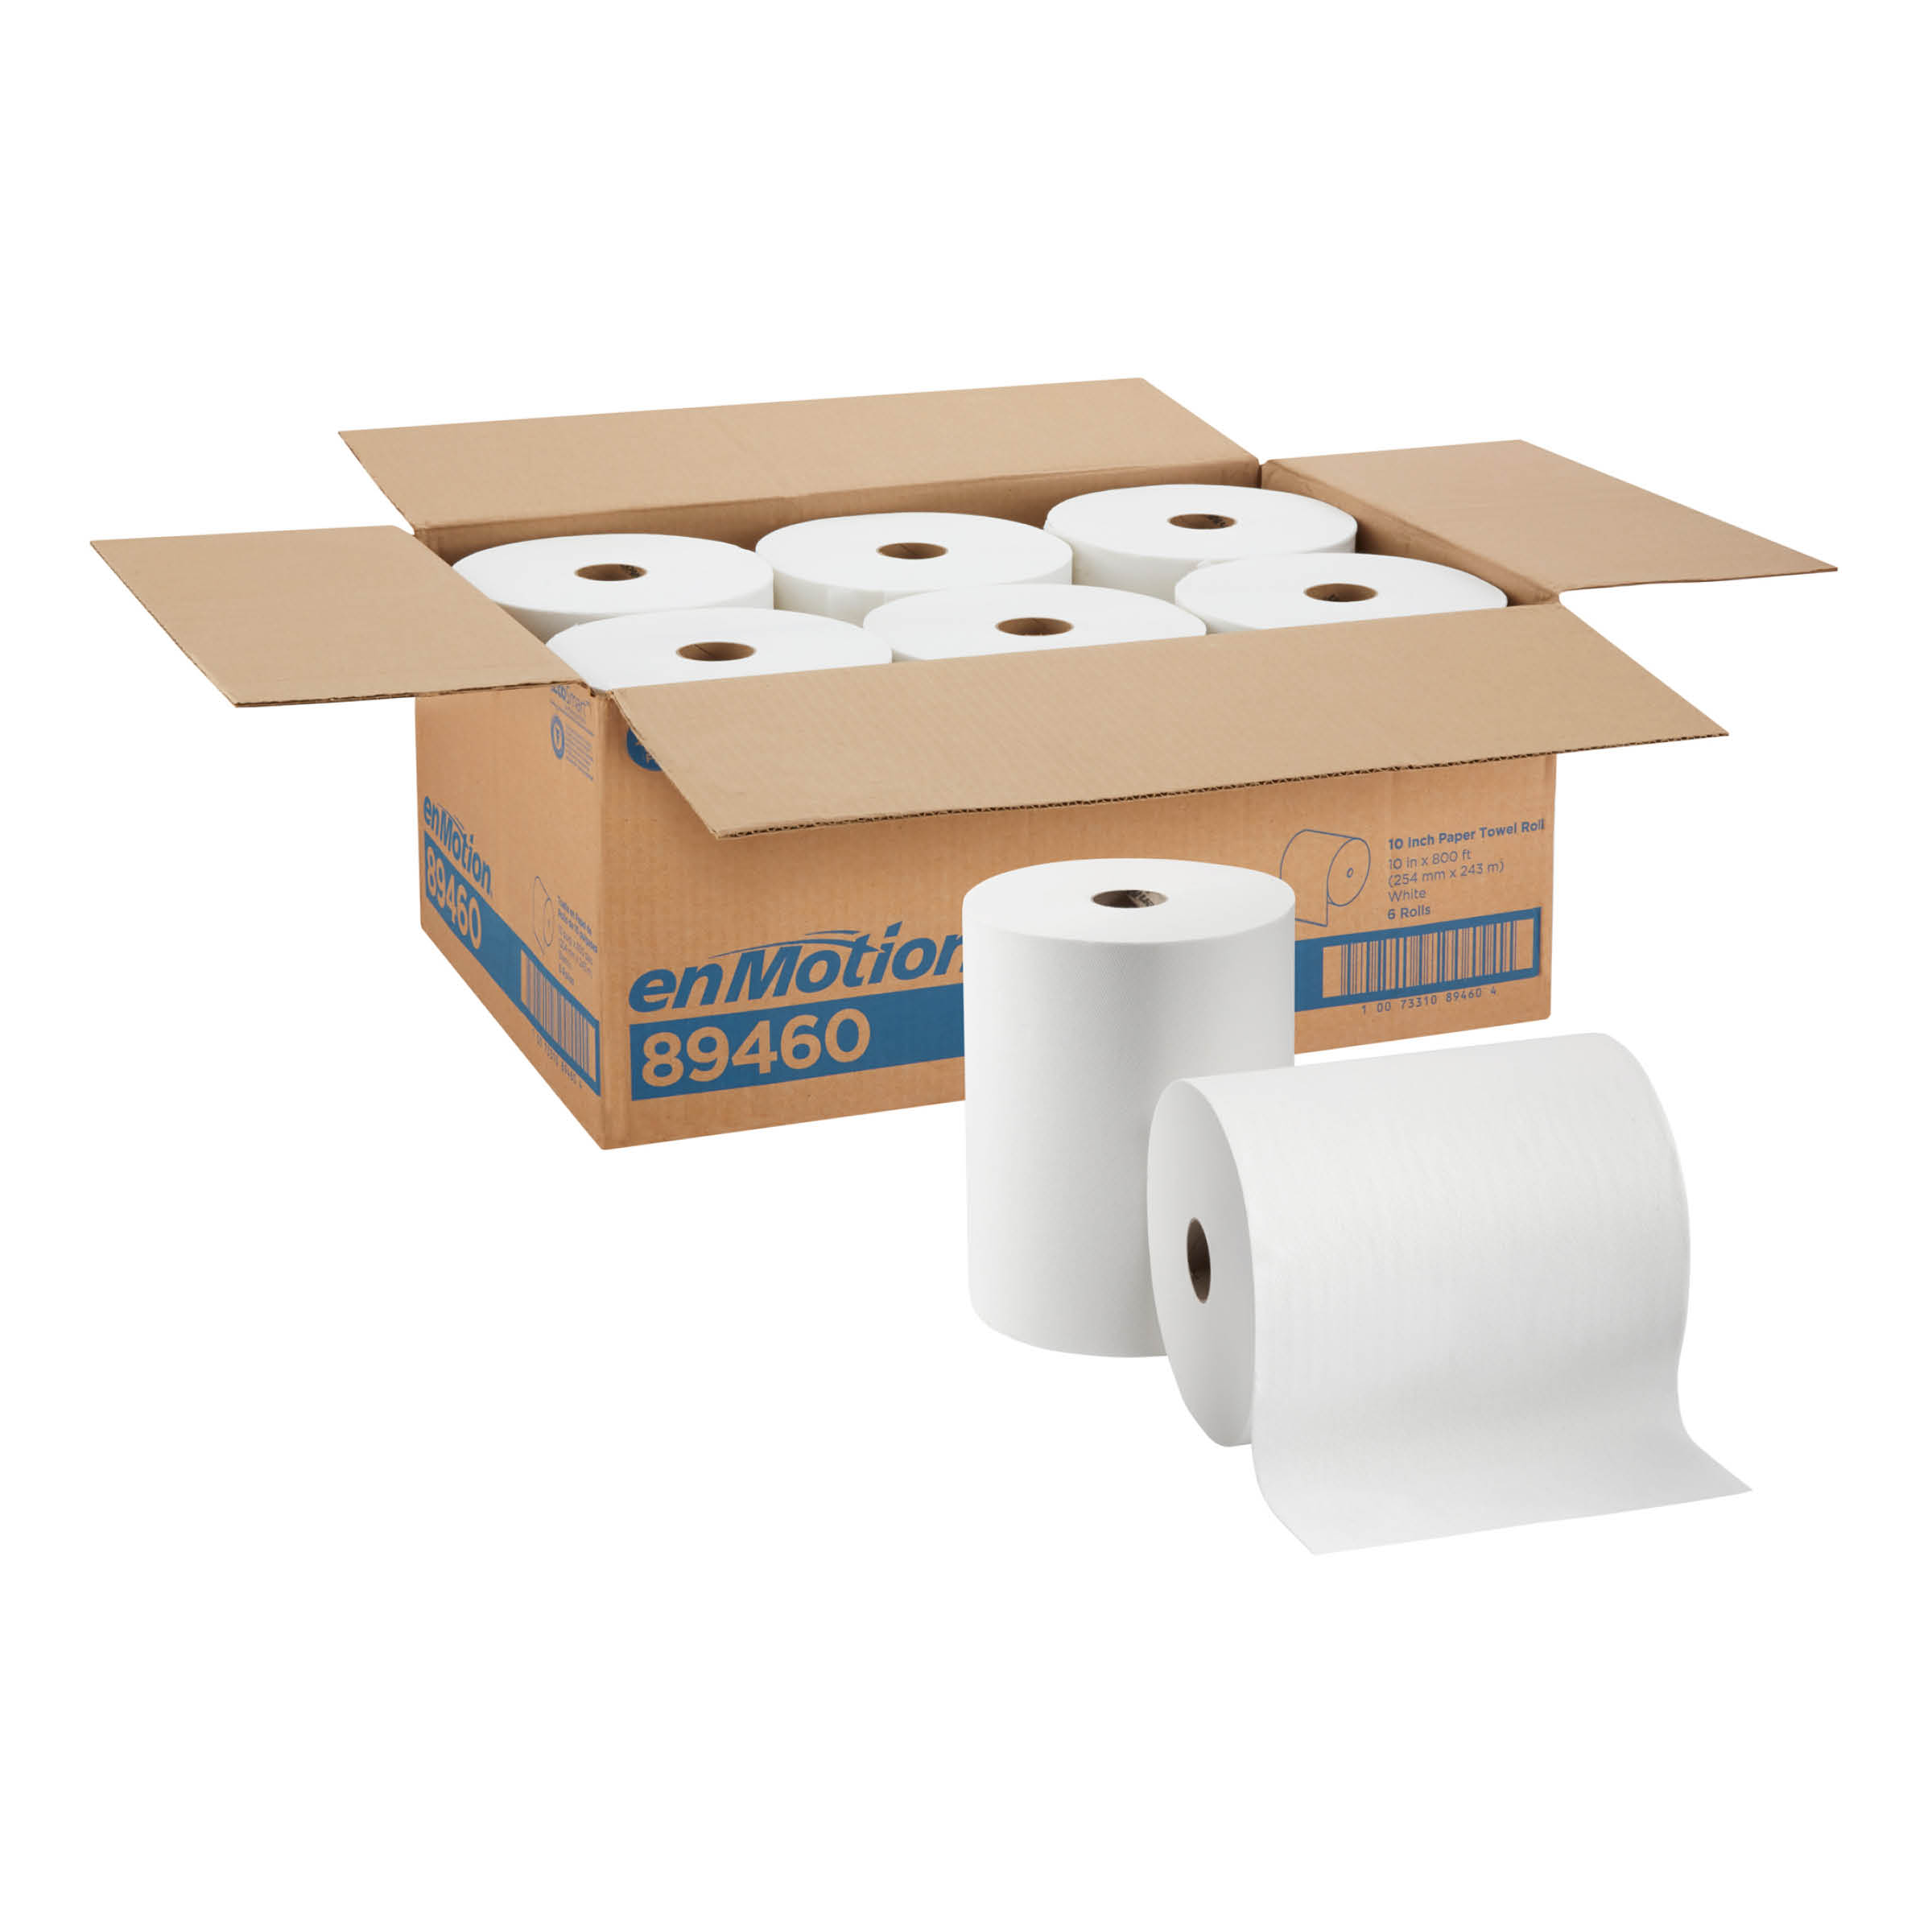 GP PRO Enmotion® 10# Paper Towel Roll White, 89460, 800' (6/cs 45cs/skid)